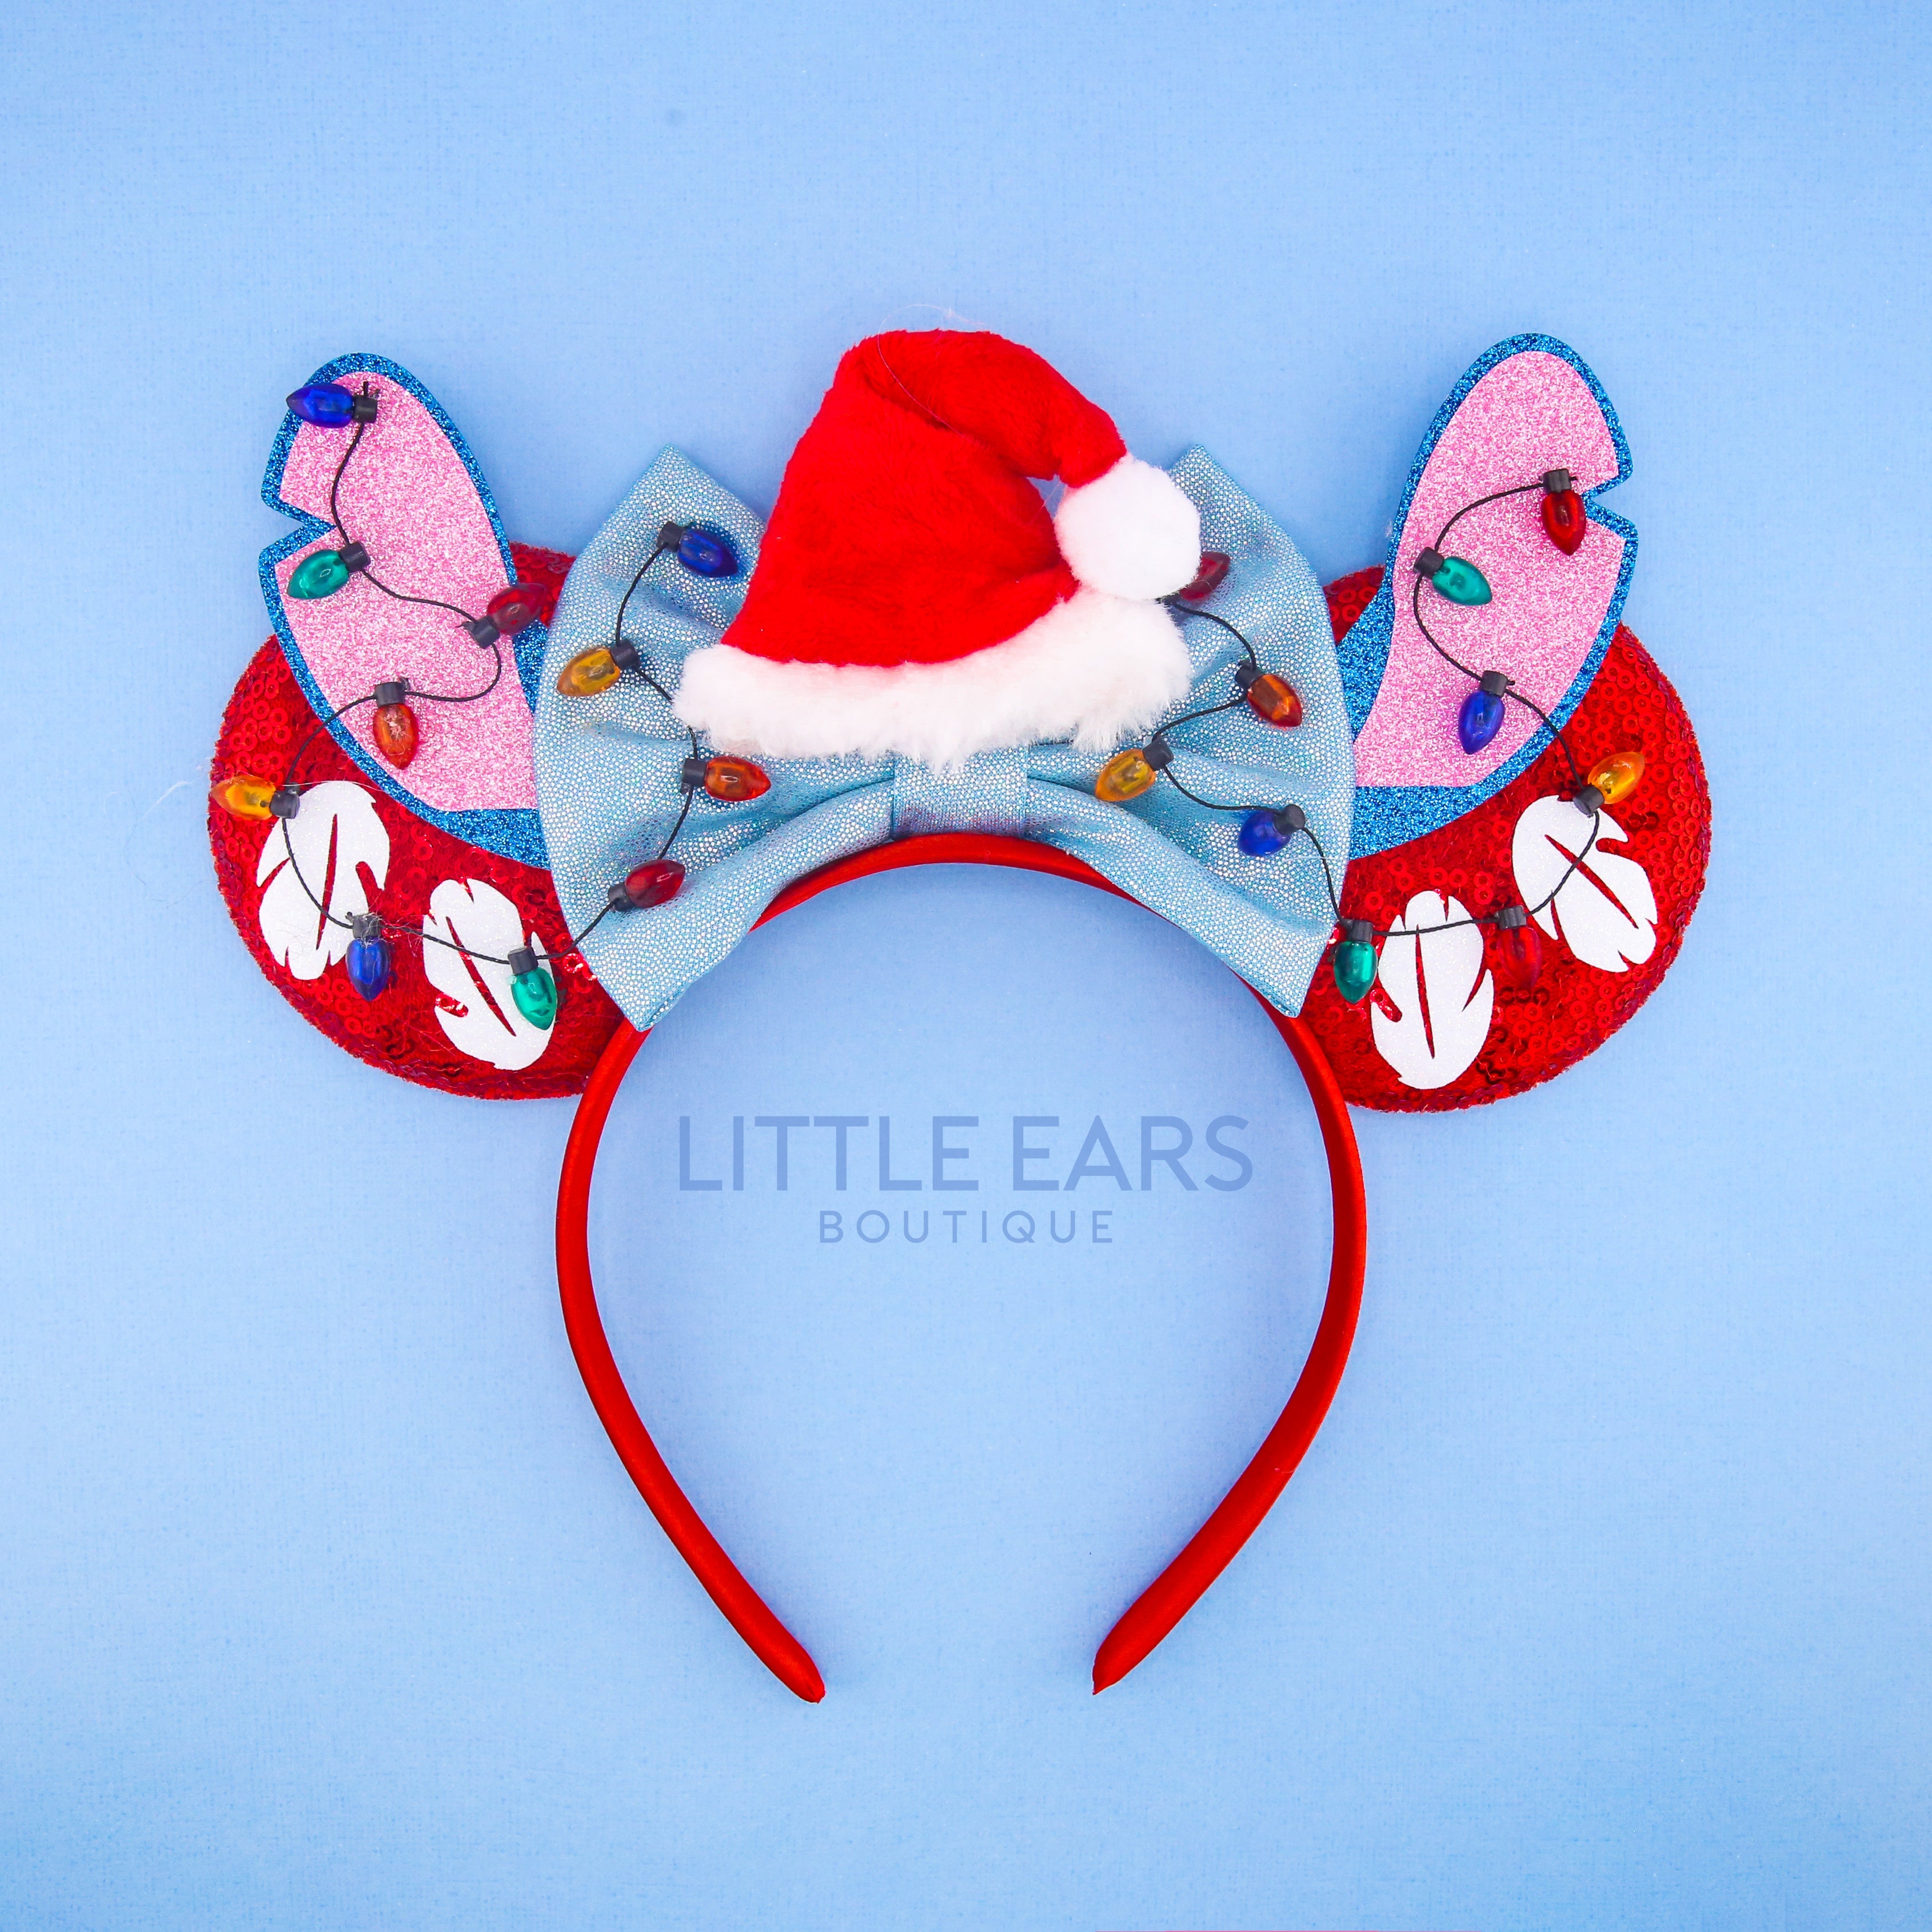 Stitch Ears Headband for Adults